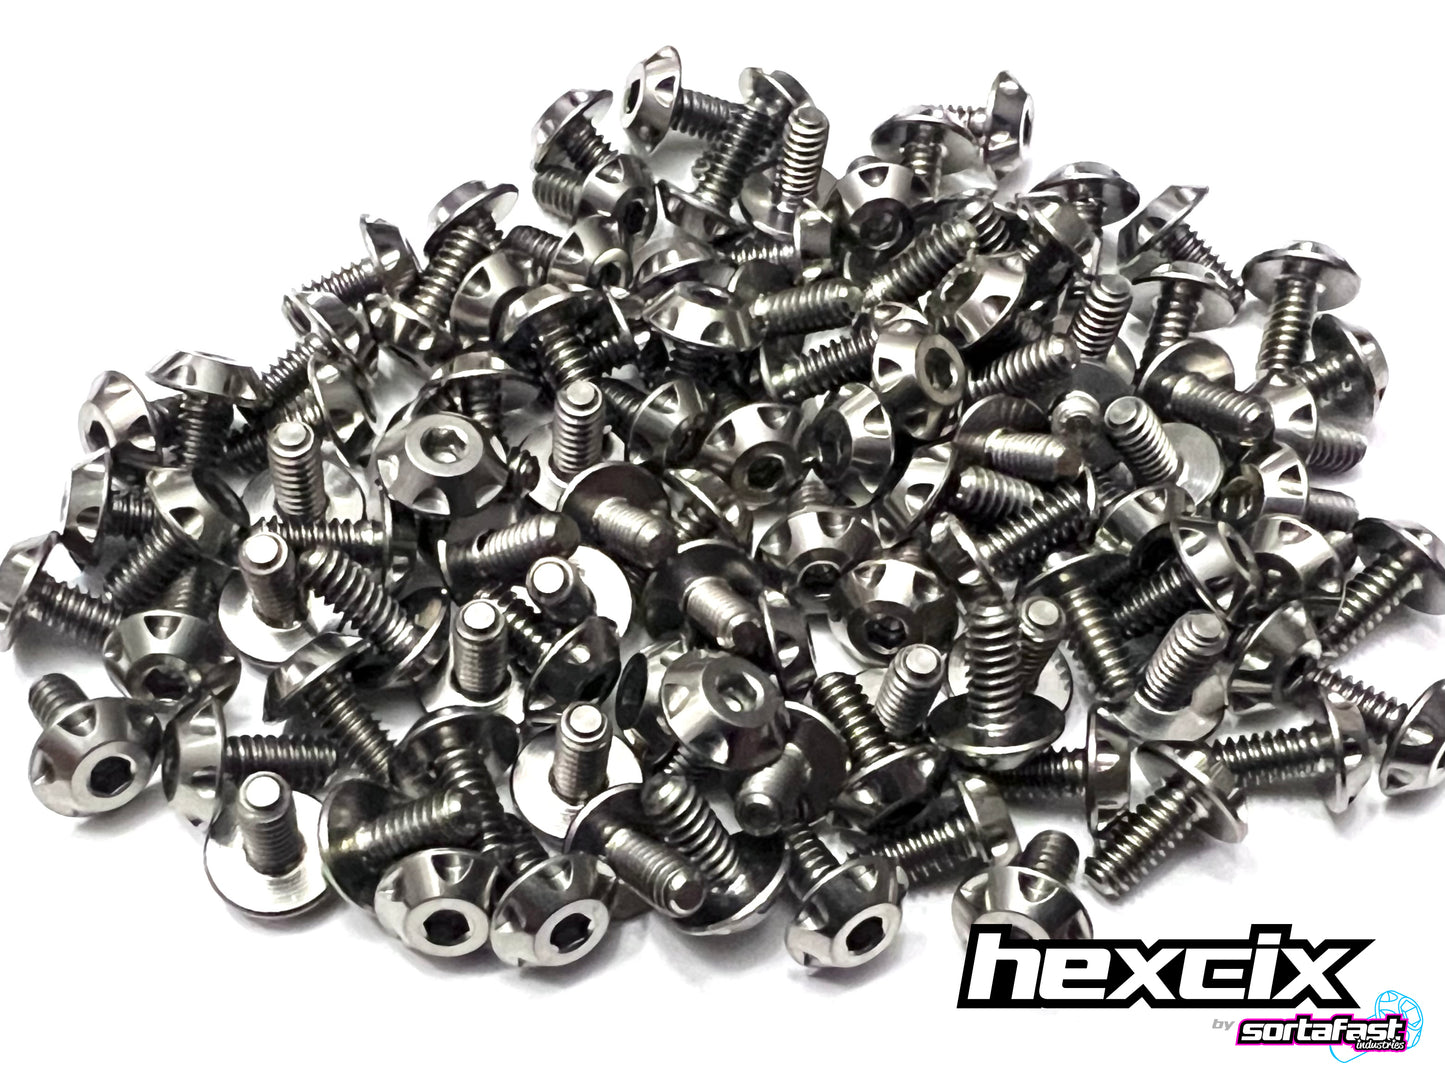 Sortafast Hexcix Titanium Screws - King Head - 2pk (Standard)